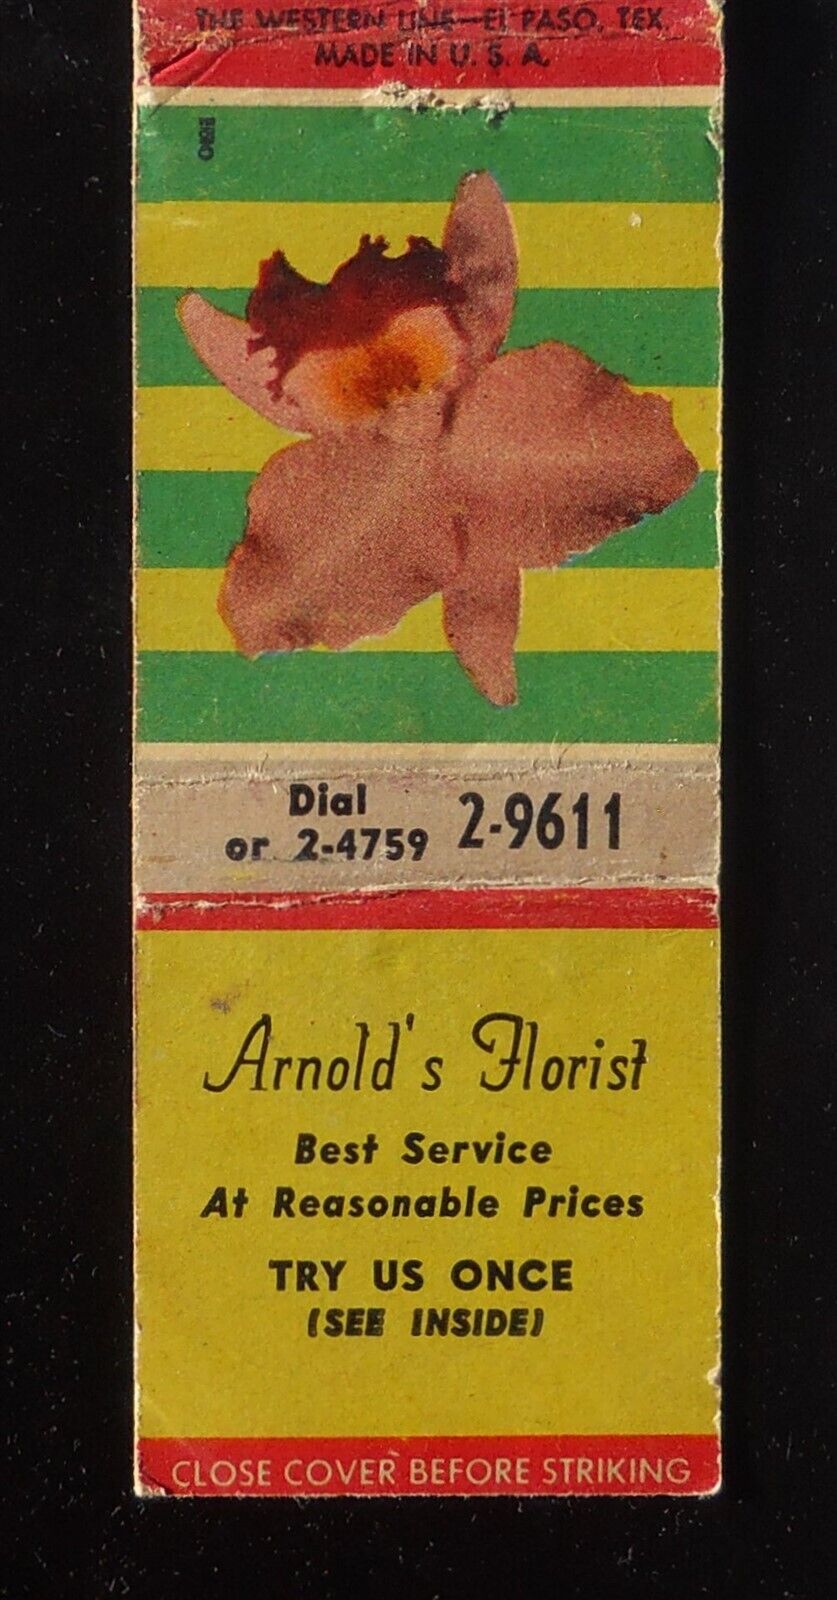 1940s BULLDOZED? Arnold\'s Florist Dial 2-9611 101 E. Main St. El Paso TX MB